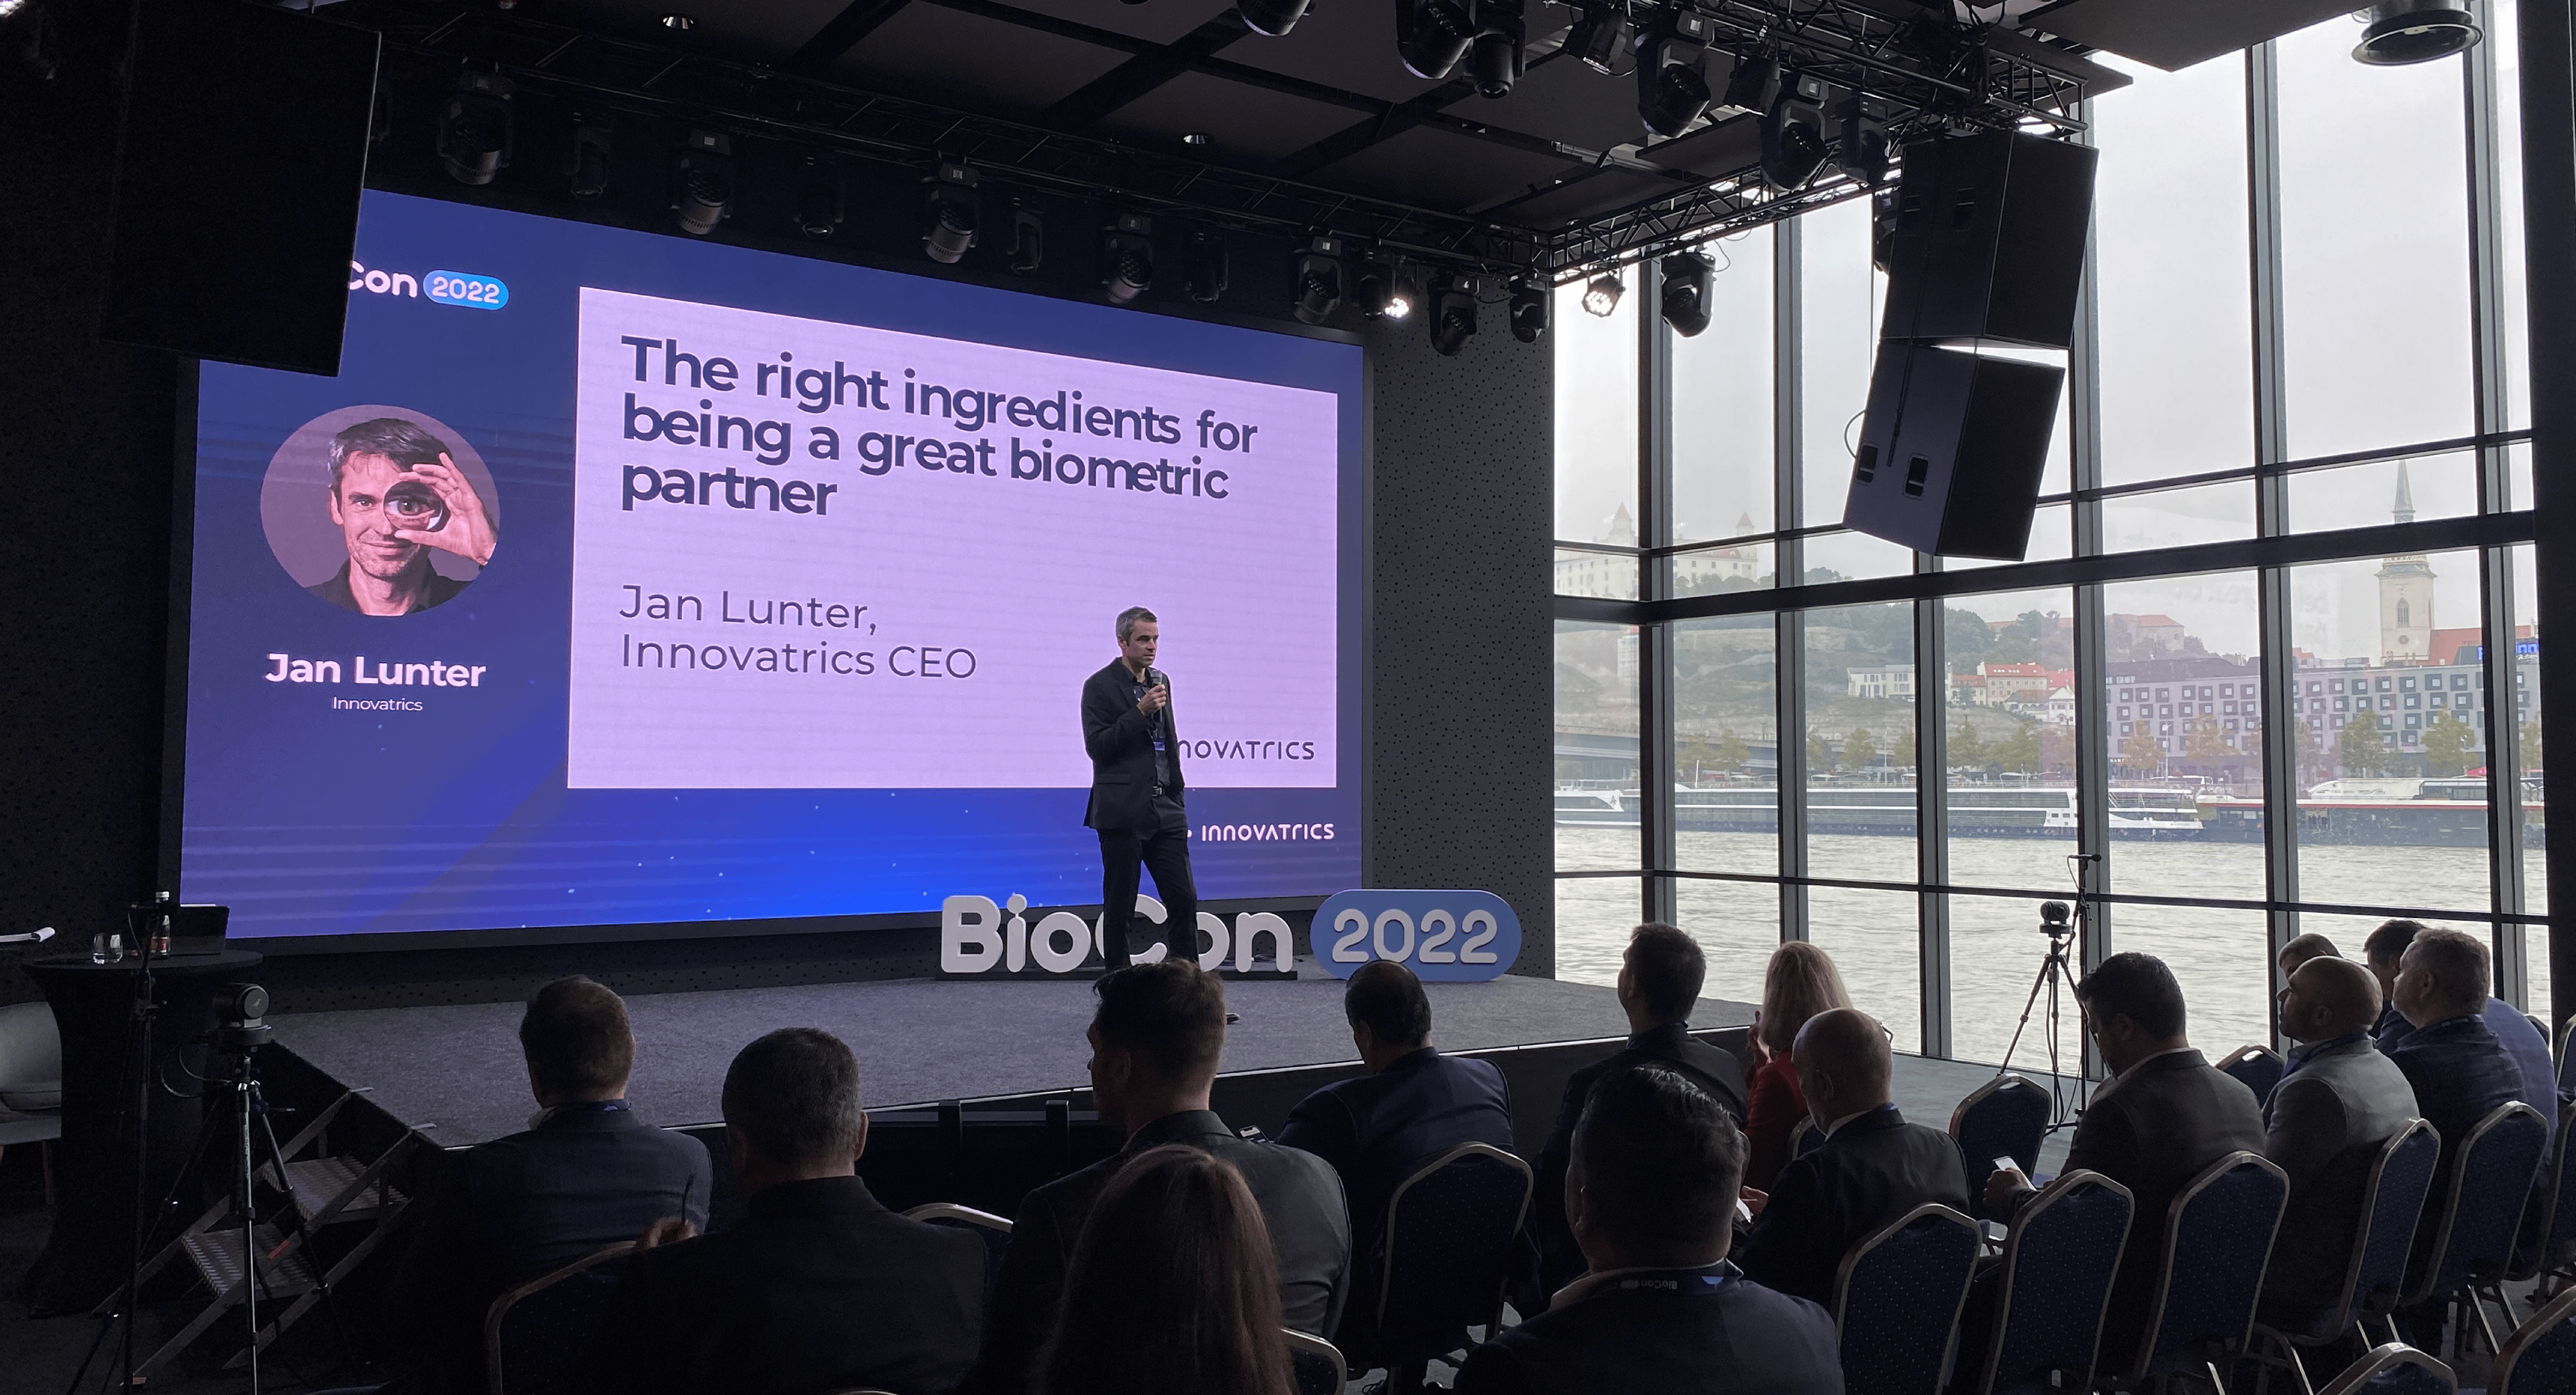 biocon-2022-ceo-innovatrics